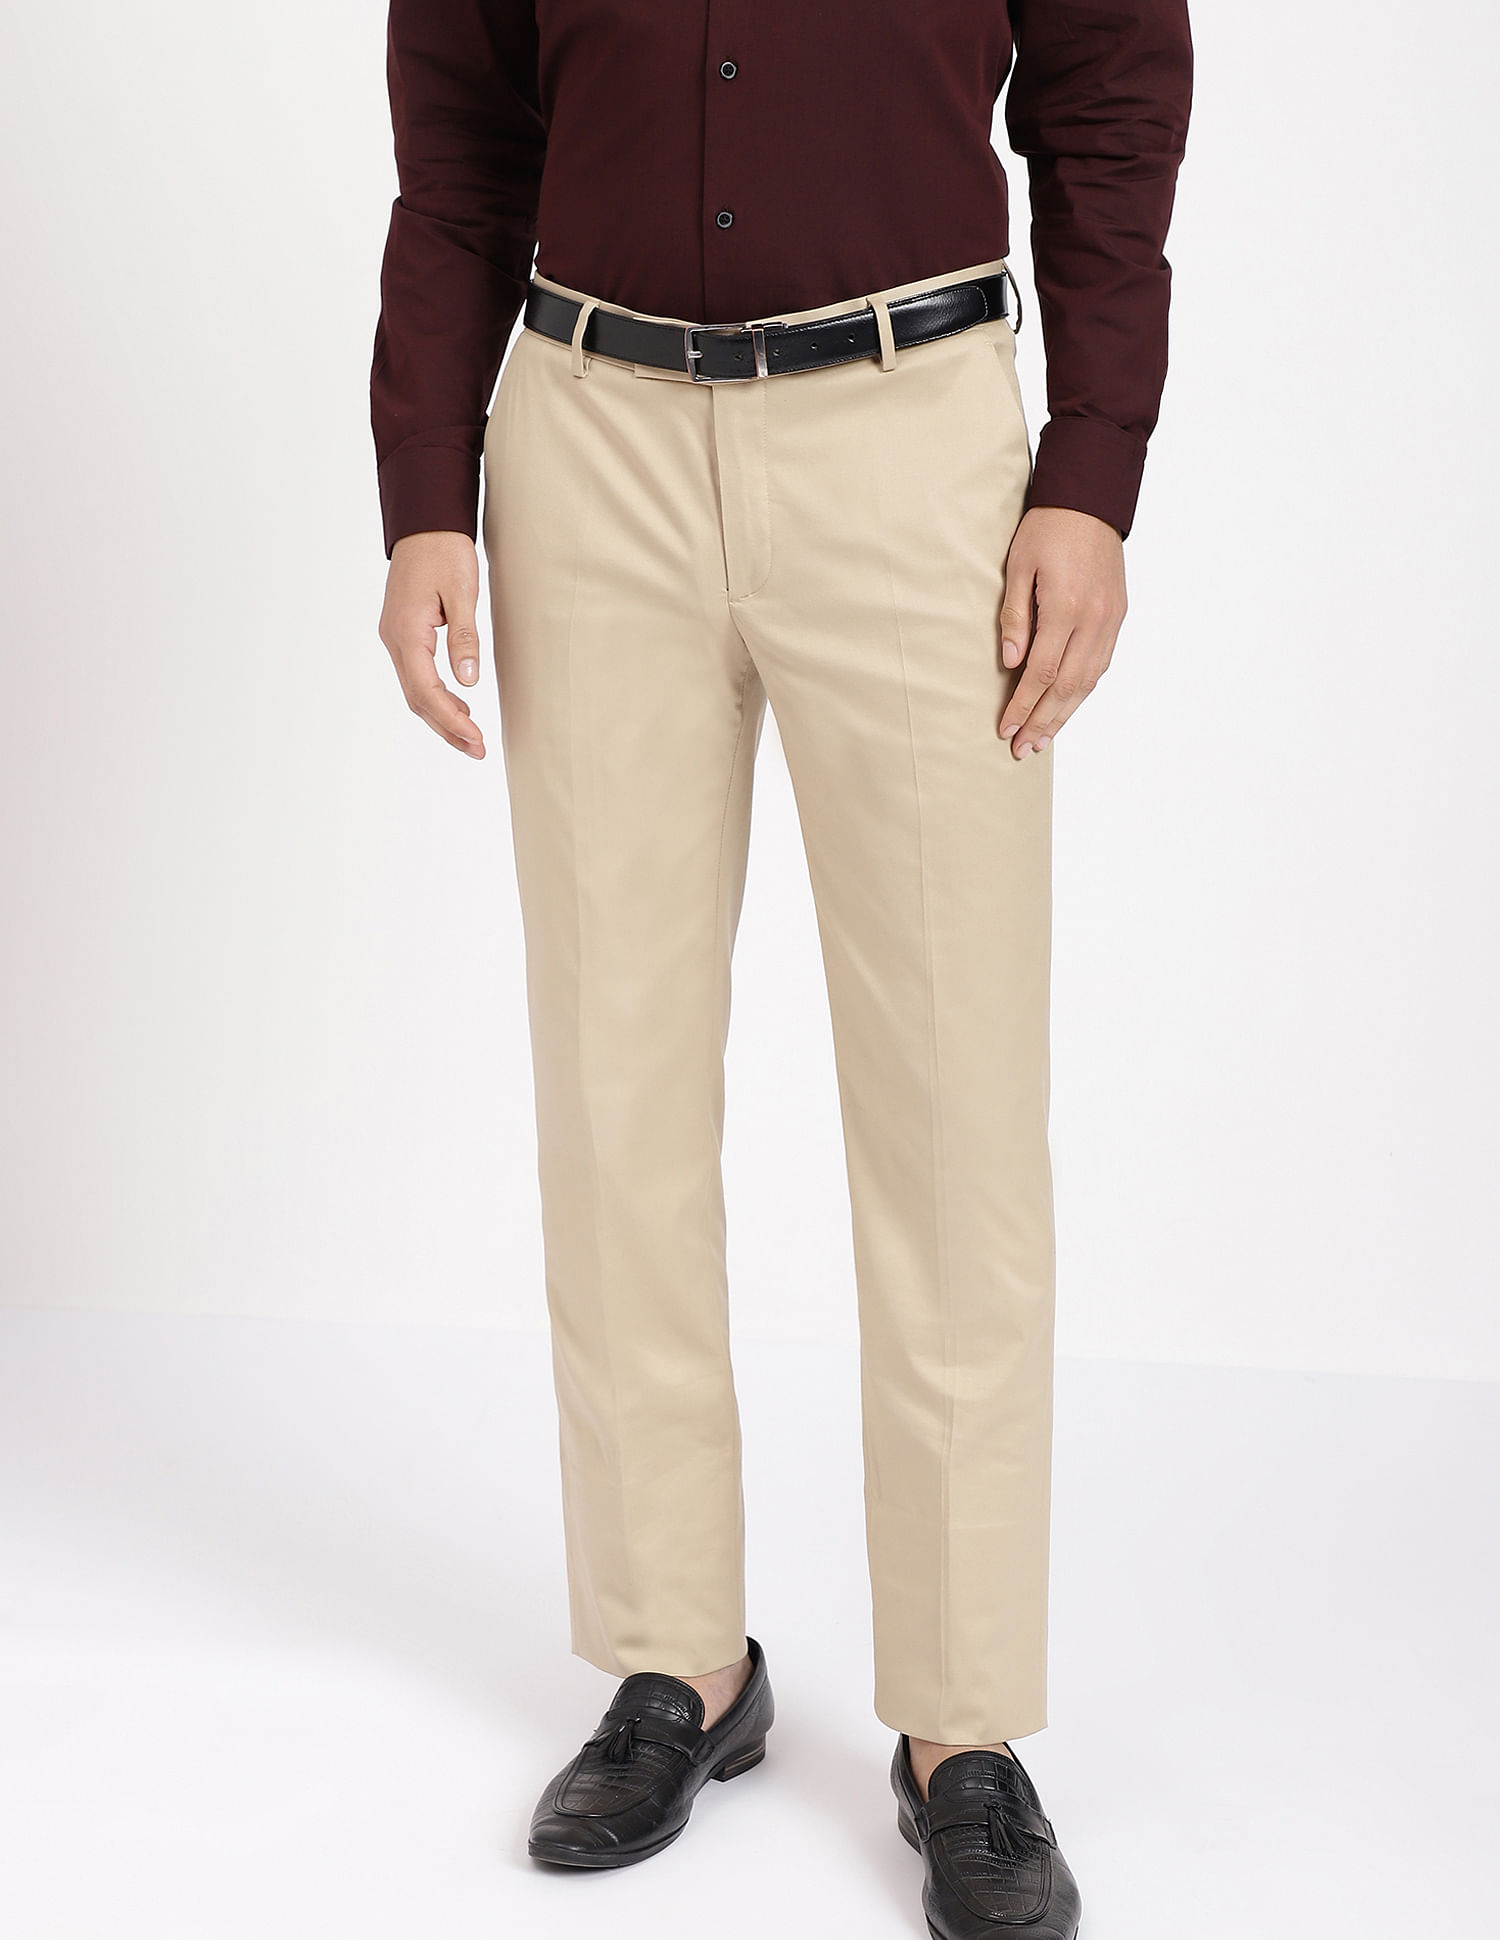 Buy Light Grey Trousers & Pants for Men by ARROW Online | Ajio.com